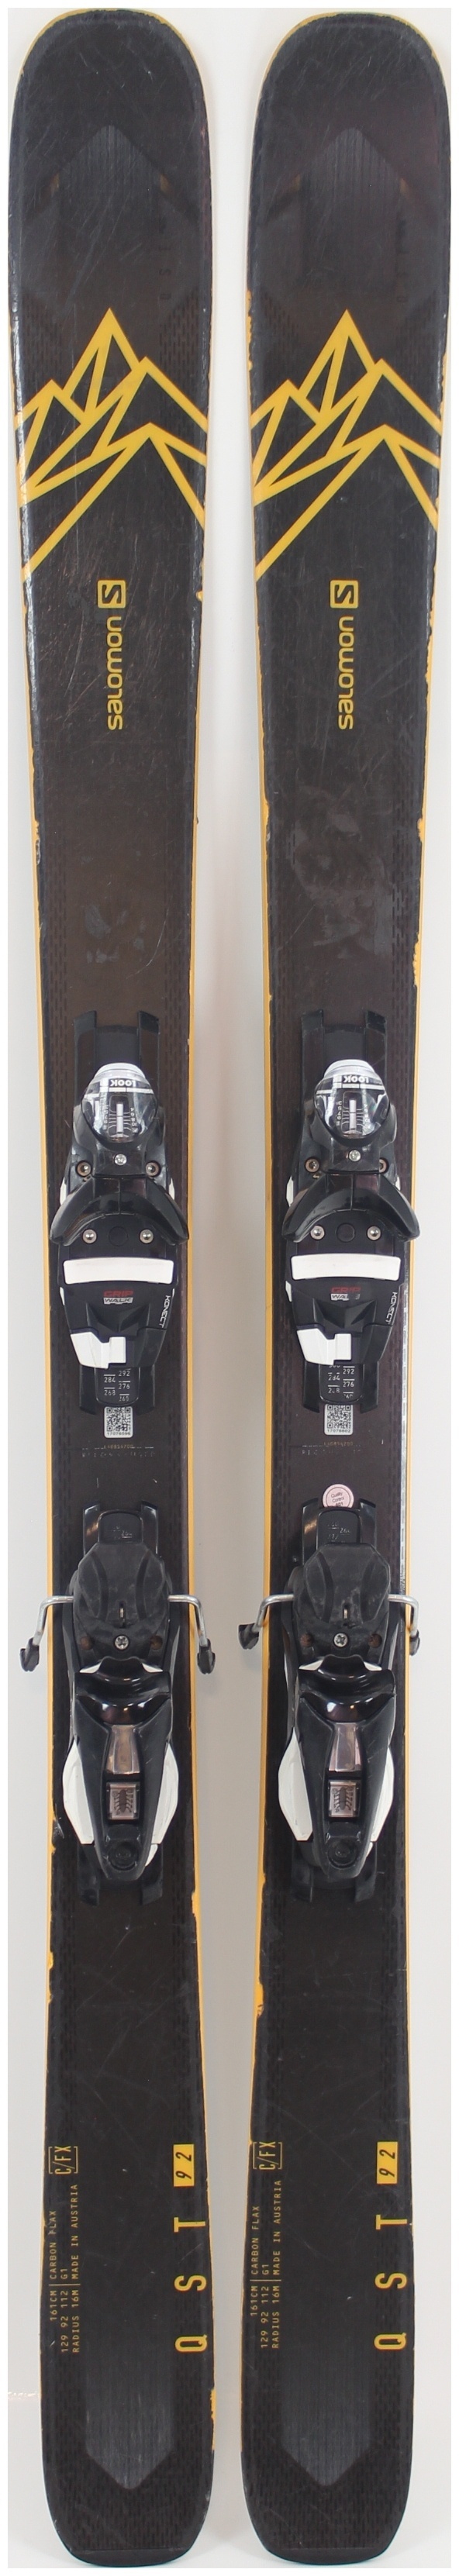 Salomon 2020 QST 92 Skis NEW ! Without Bindings / Flat 161cm 